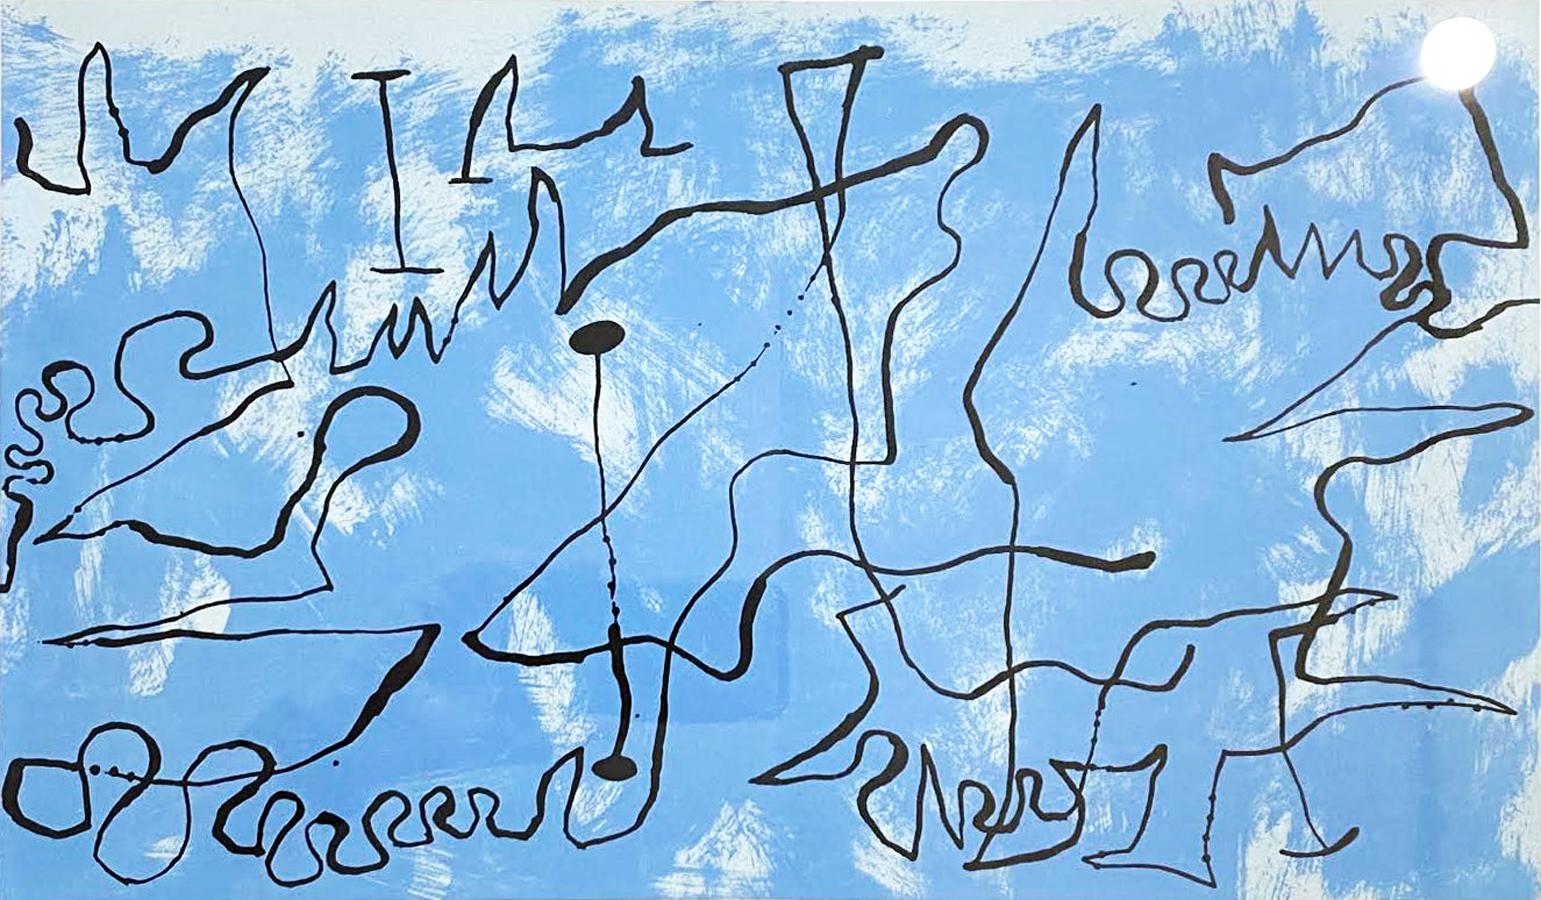 Abstract Print Joan Miró - Joan Miro (plaque 3)